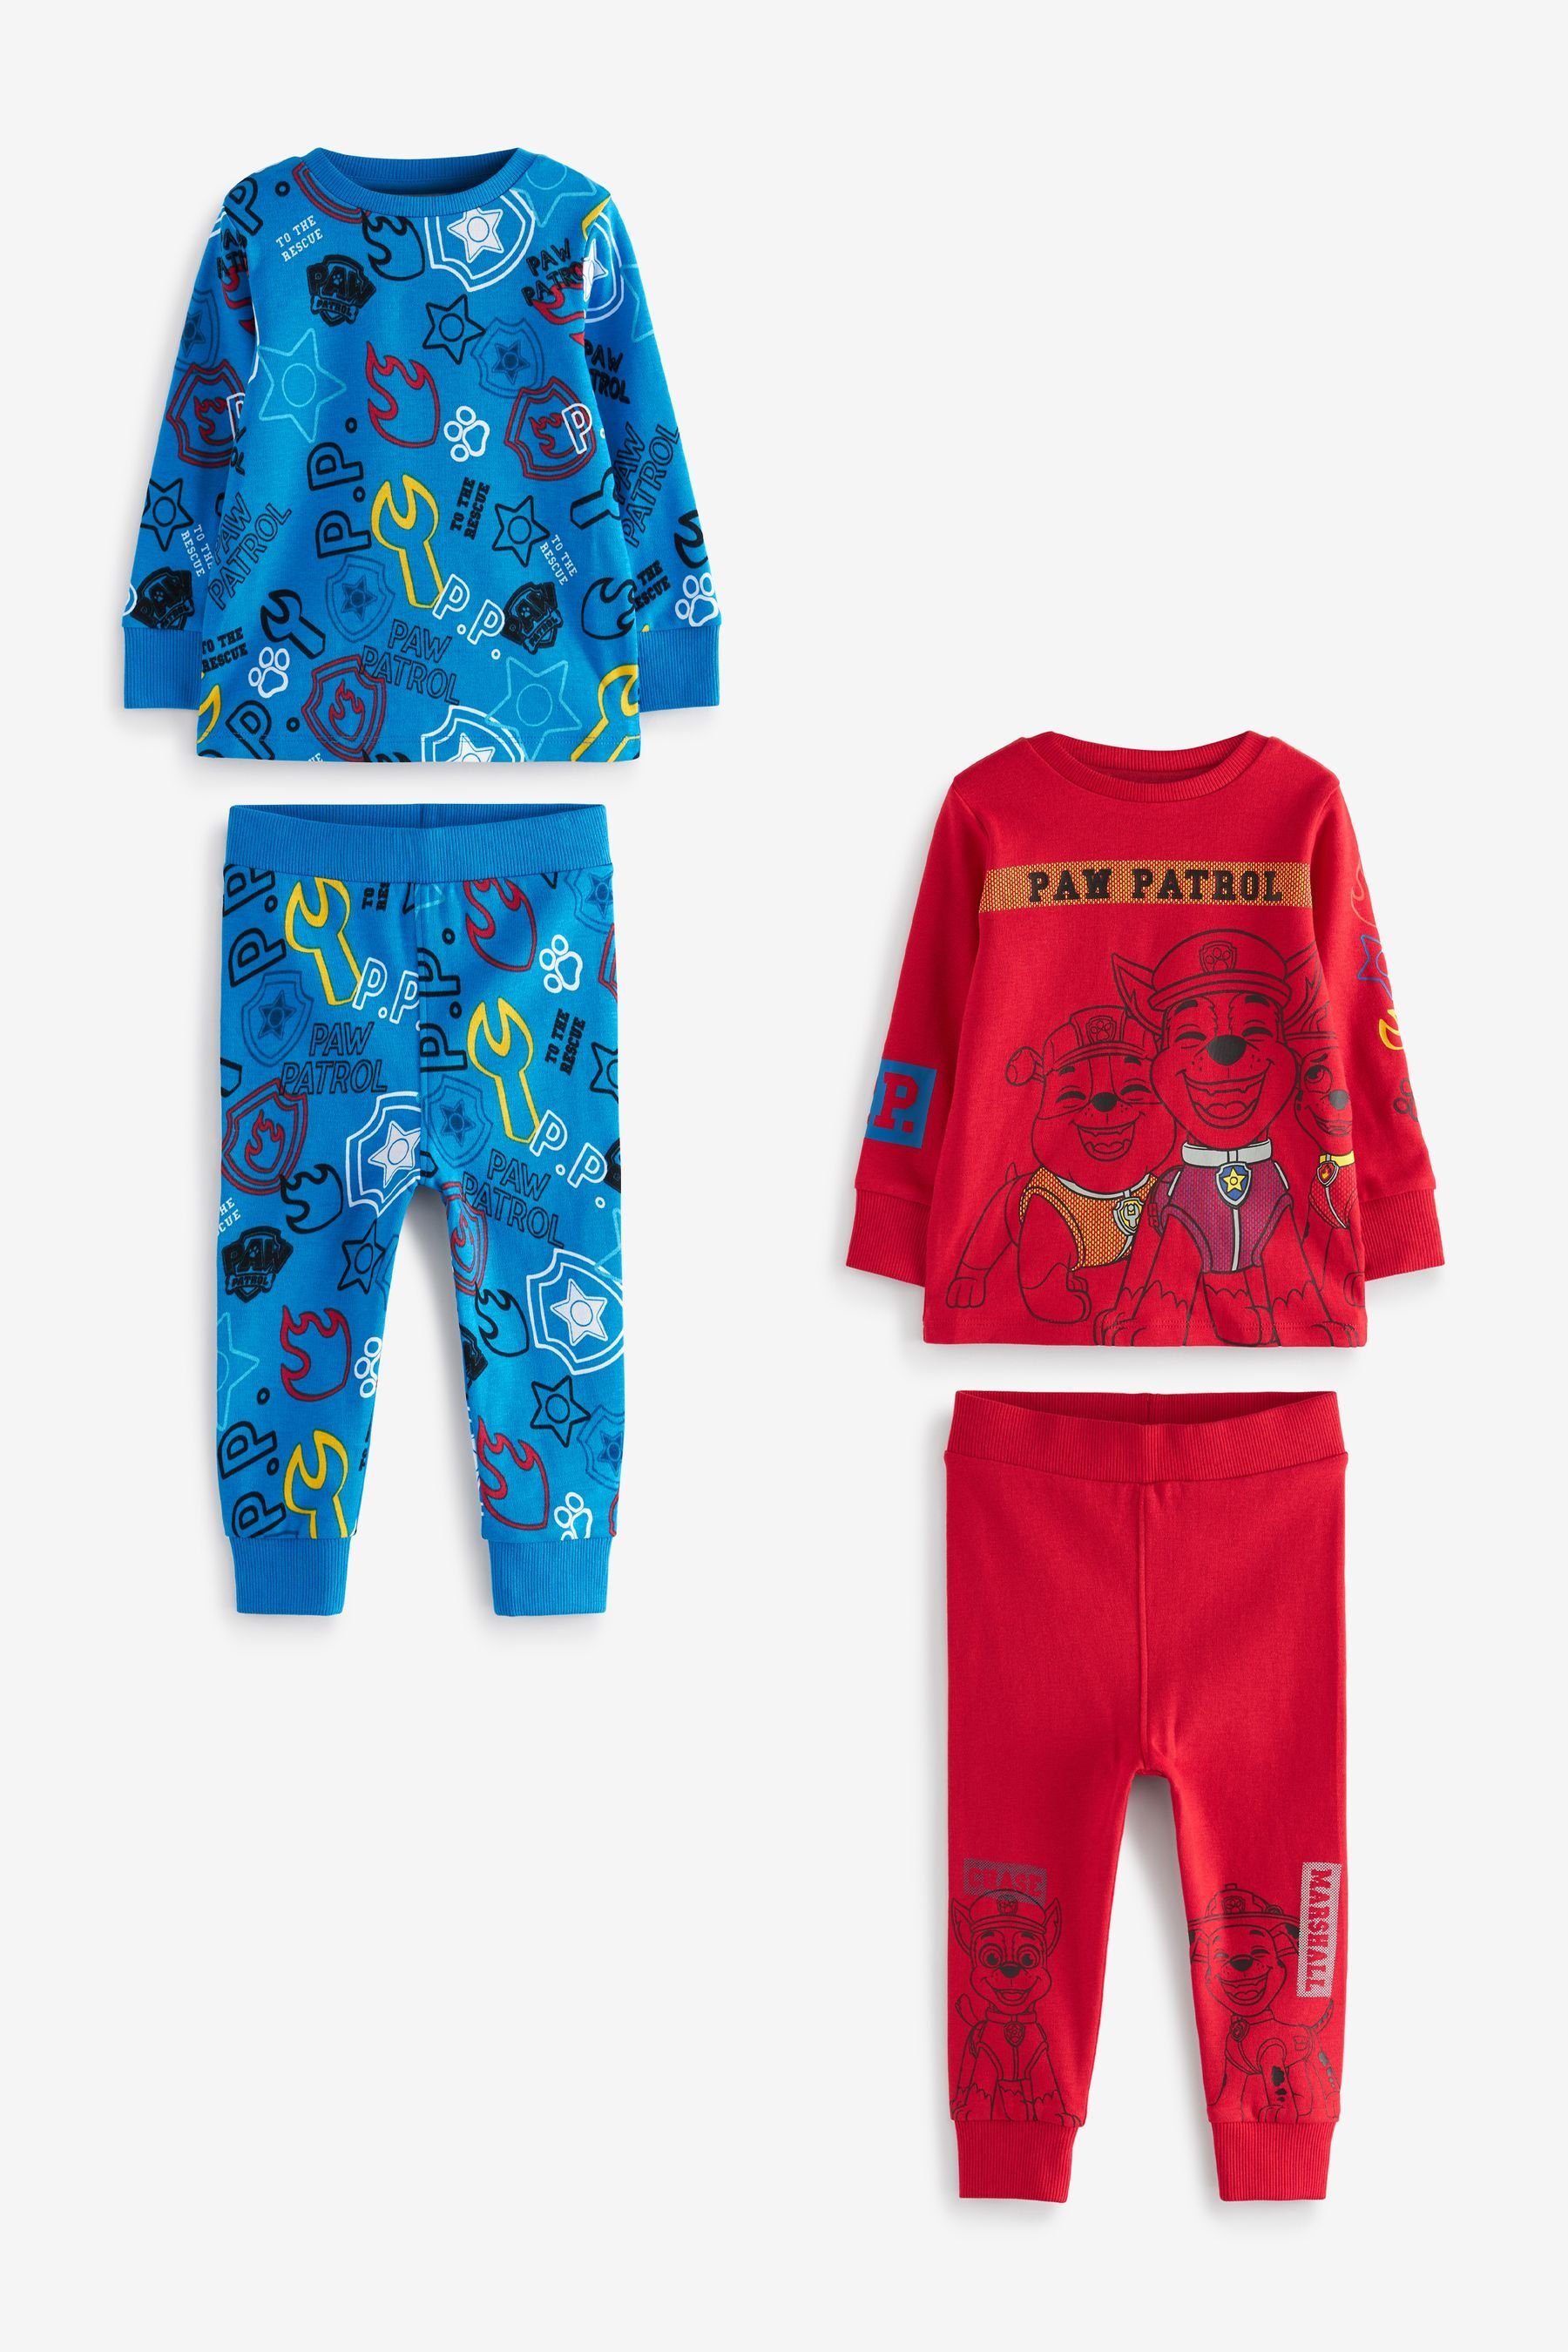 Next Patrol Red/Blue Pyjama Kuschelpyjama, (4 PAW 2er-Pack tlg)